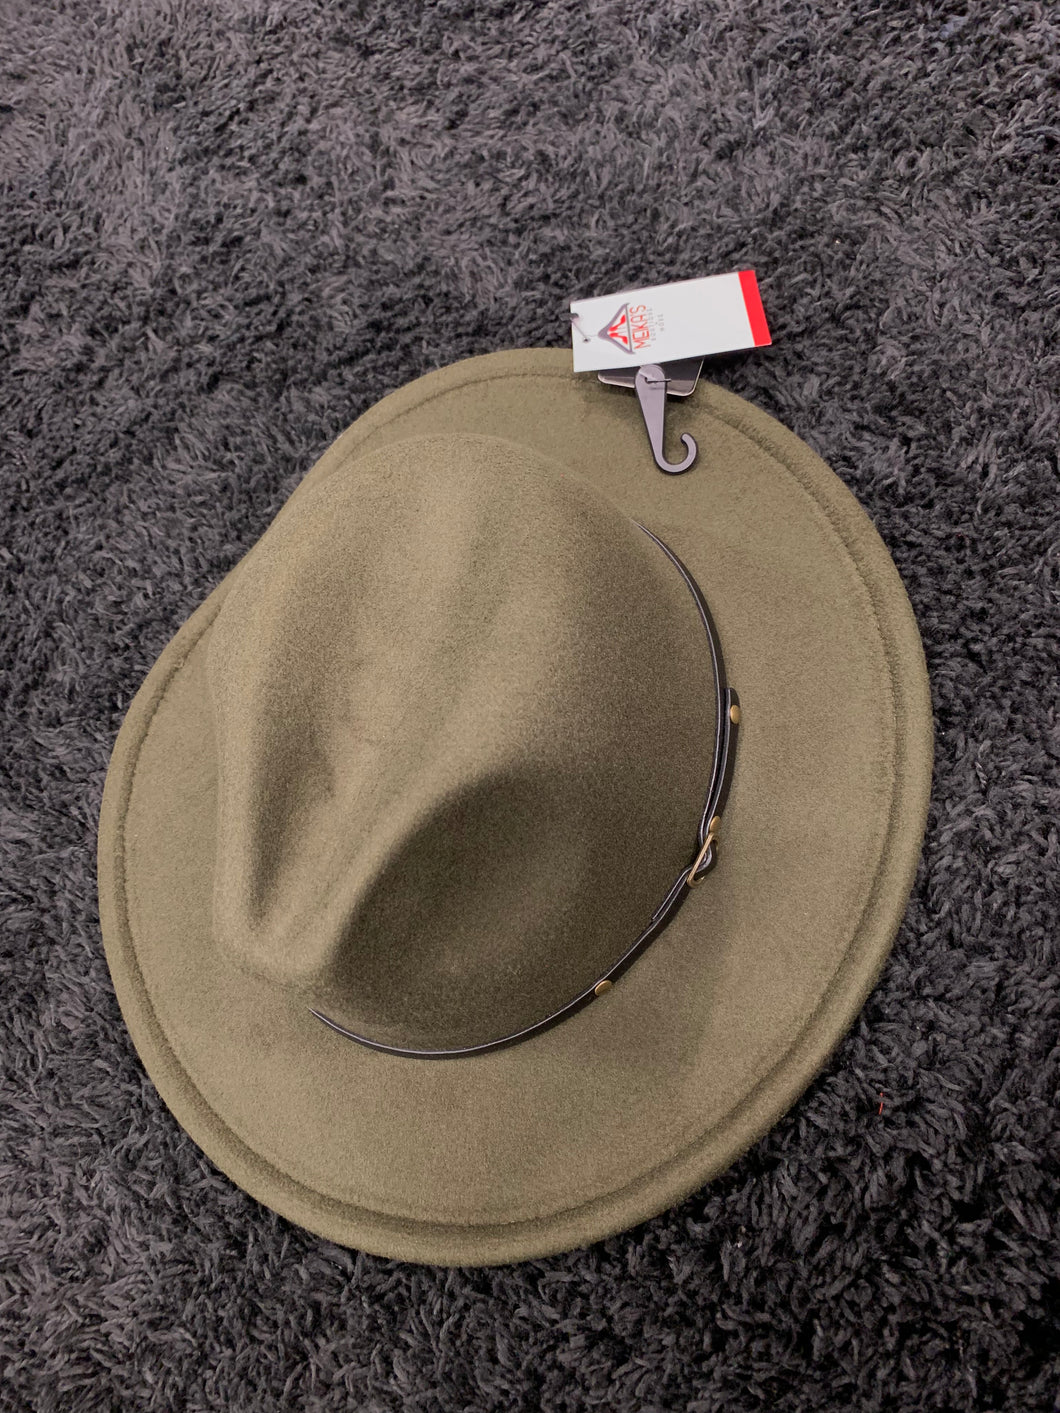 Olive Green Fedora Hat with Red Bottom Adjustable Strings inside Hat